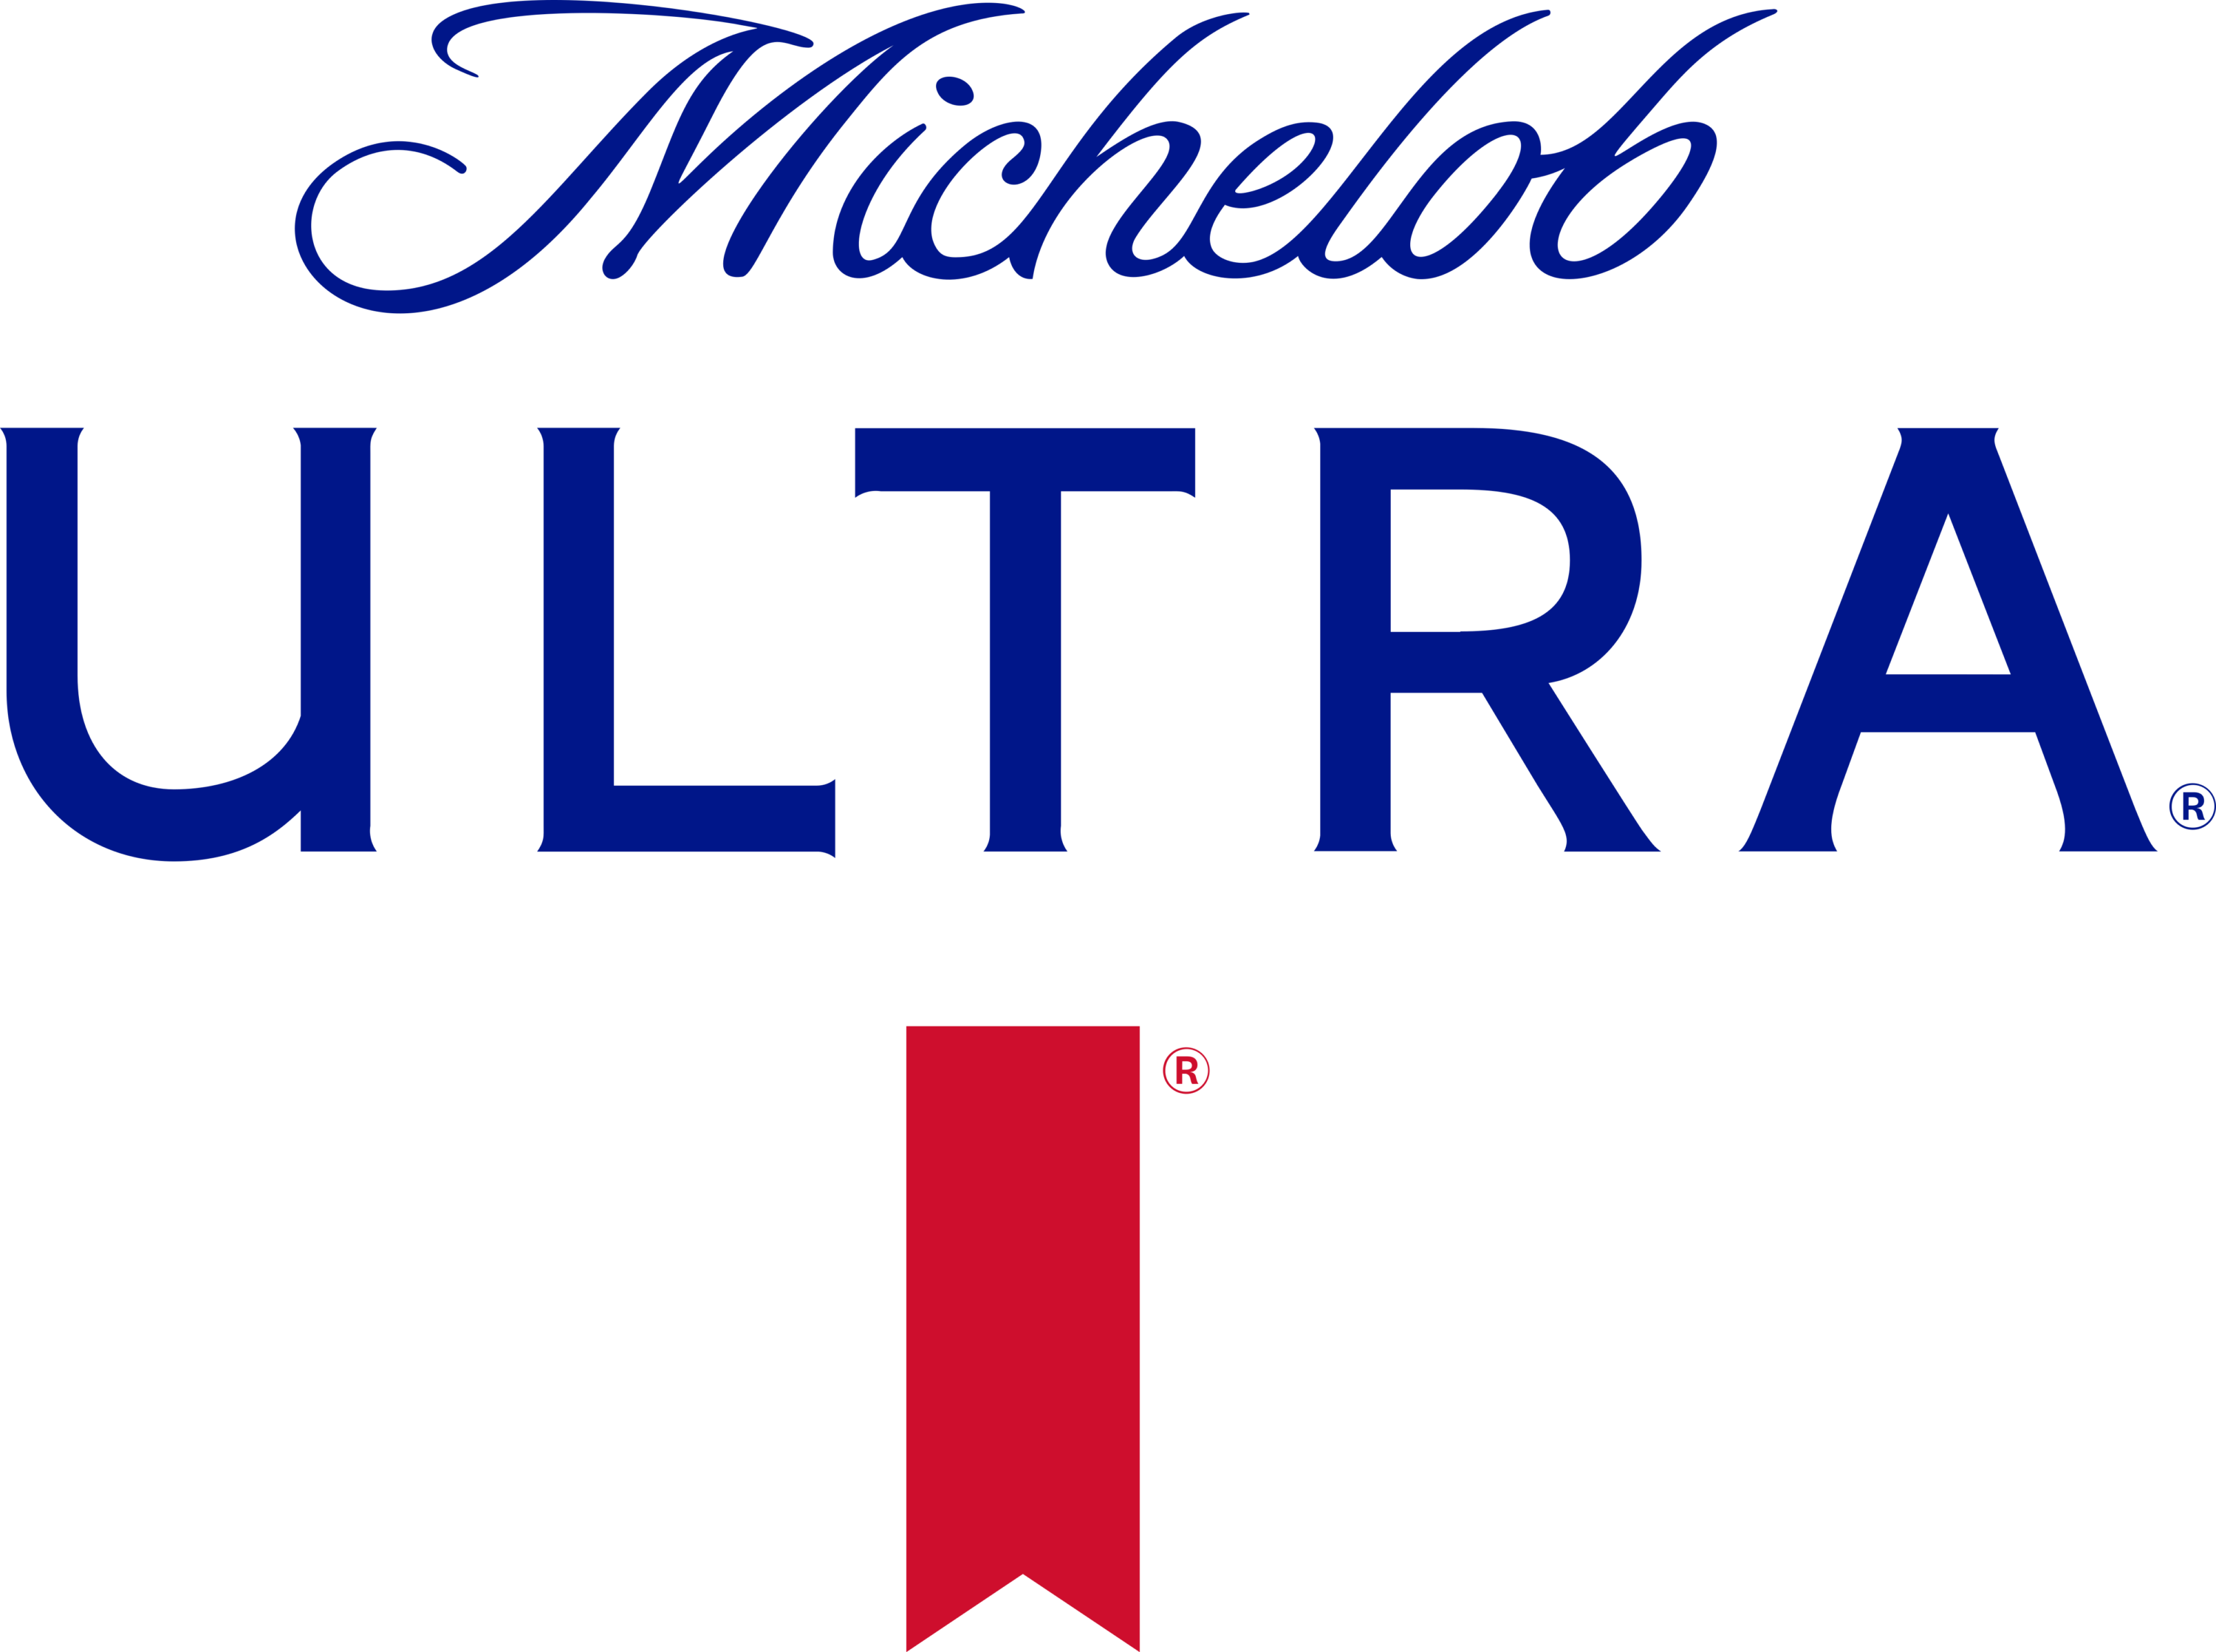 Michelob ULTRA Logo text